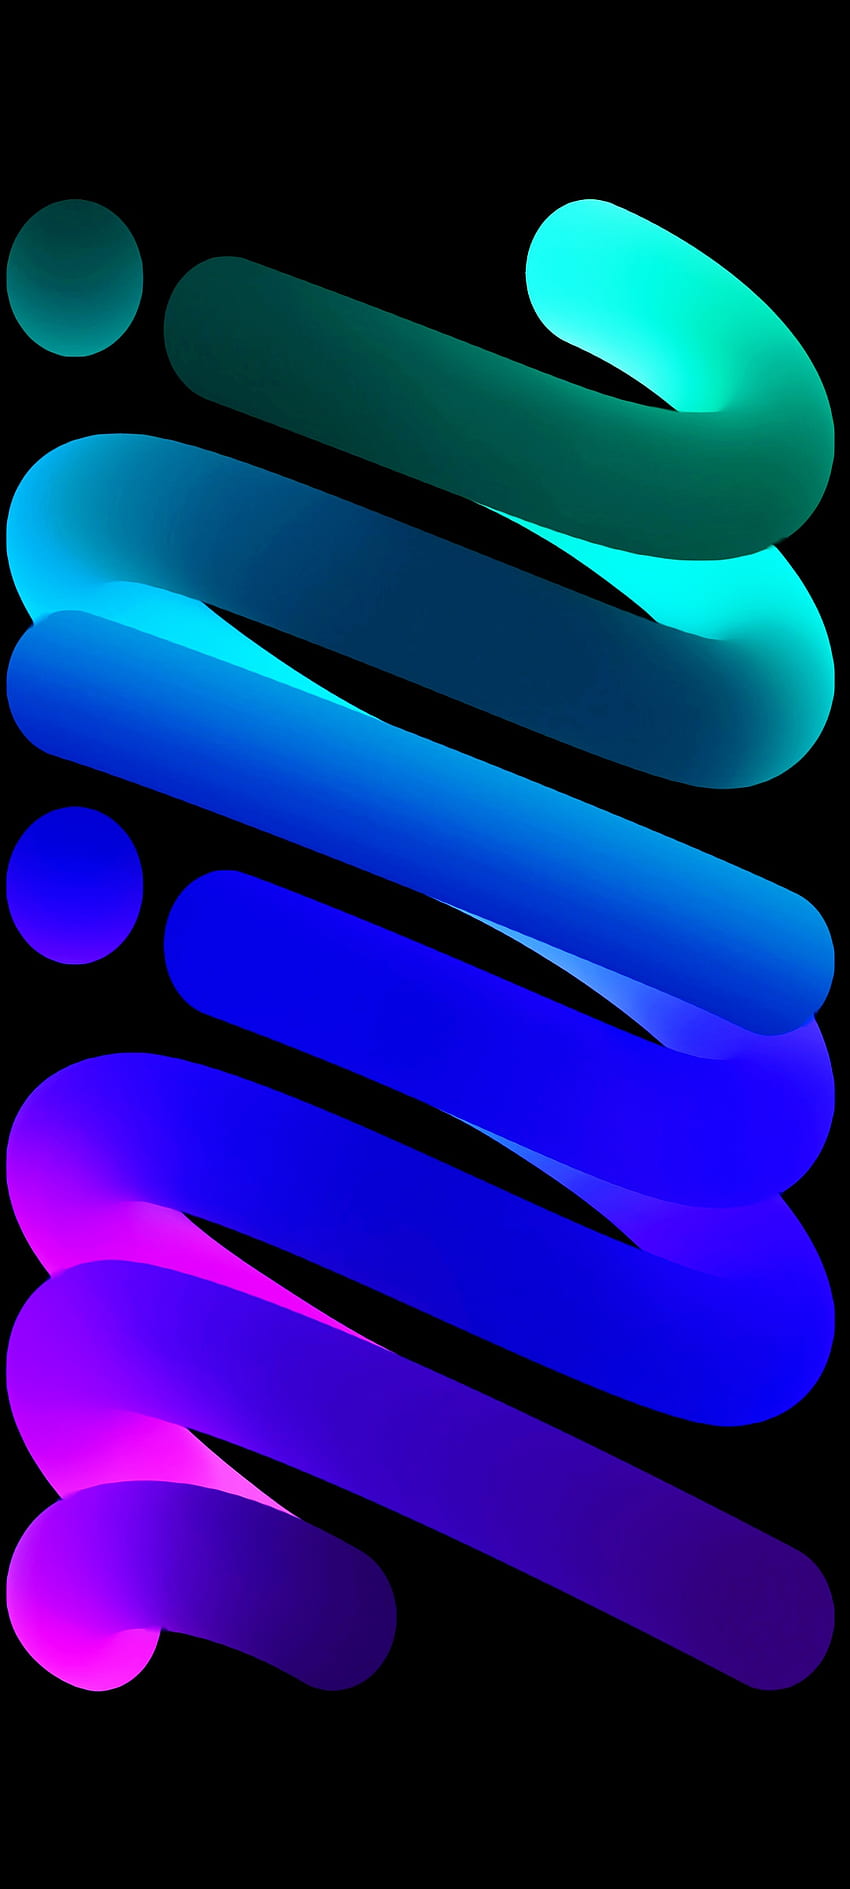 Neon Swirl, colorful HD phone wallpaper